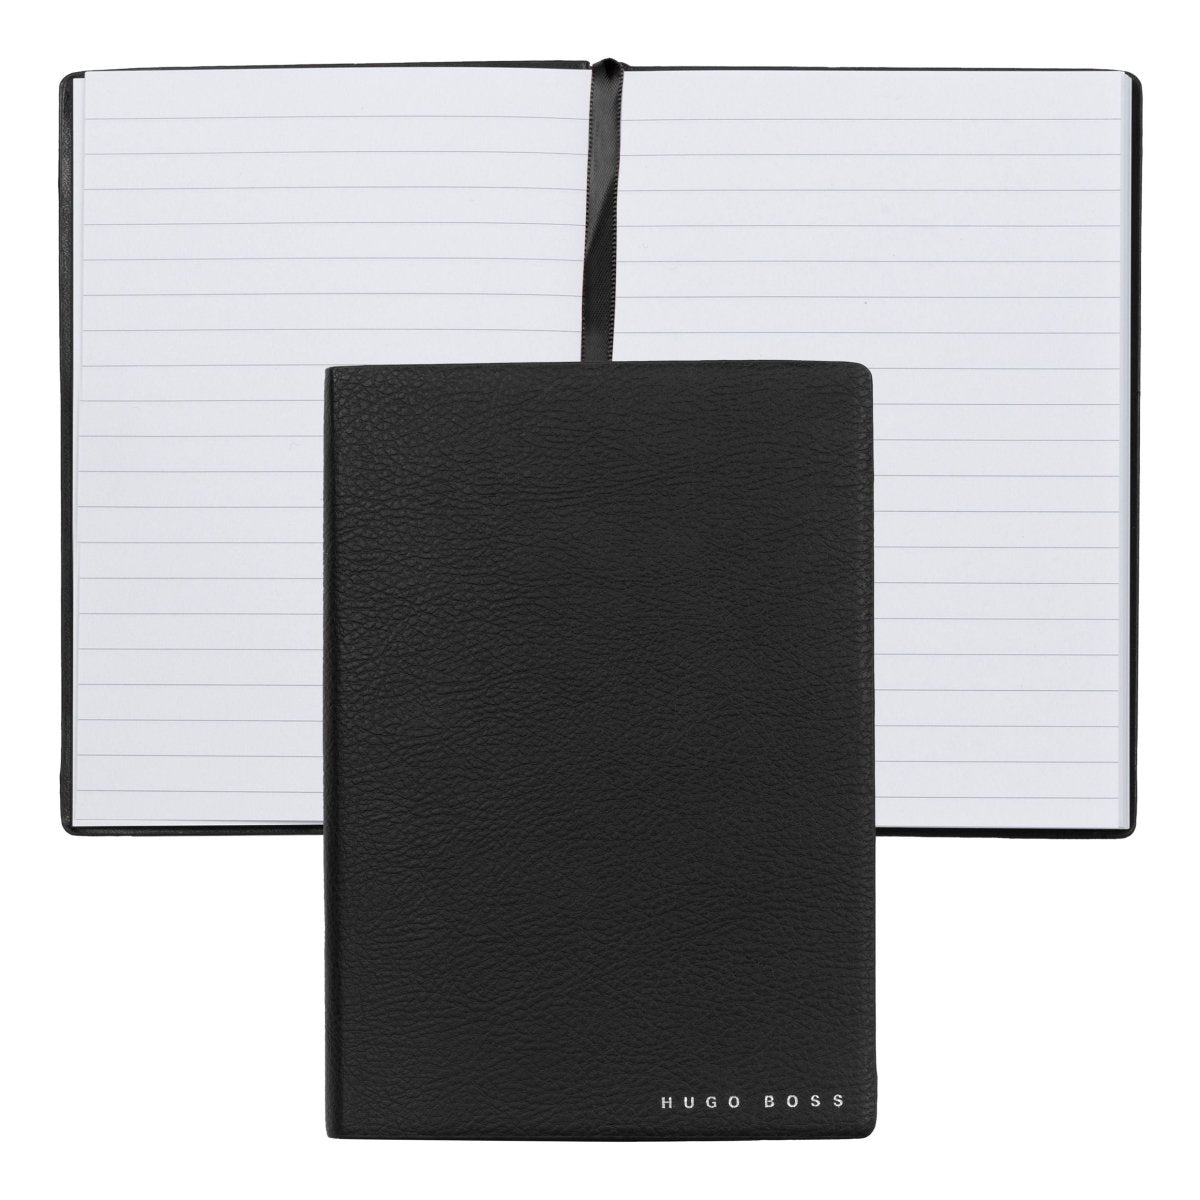 HUGO BOSS HNM121AL Σημειωματάριο A6 Essential Storyline Black Notebook - Κοσμηματοπωλείο Goldy